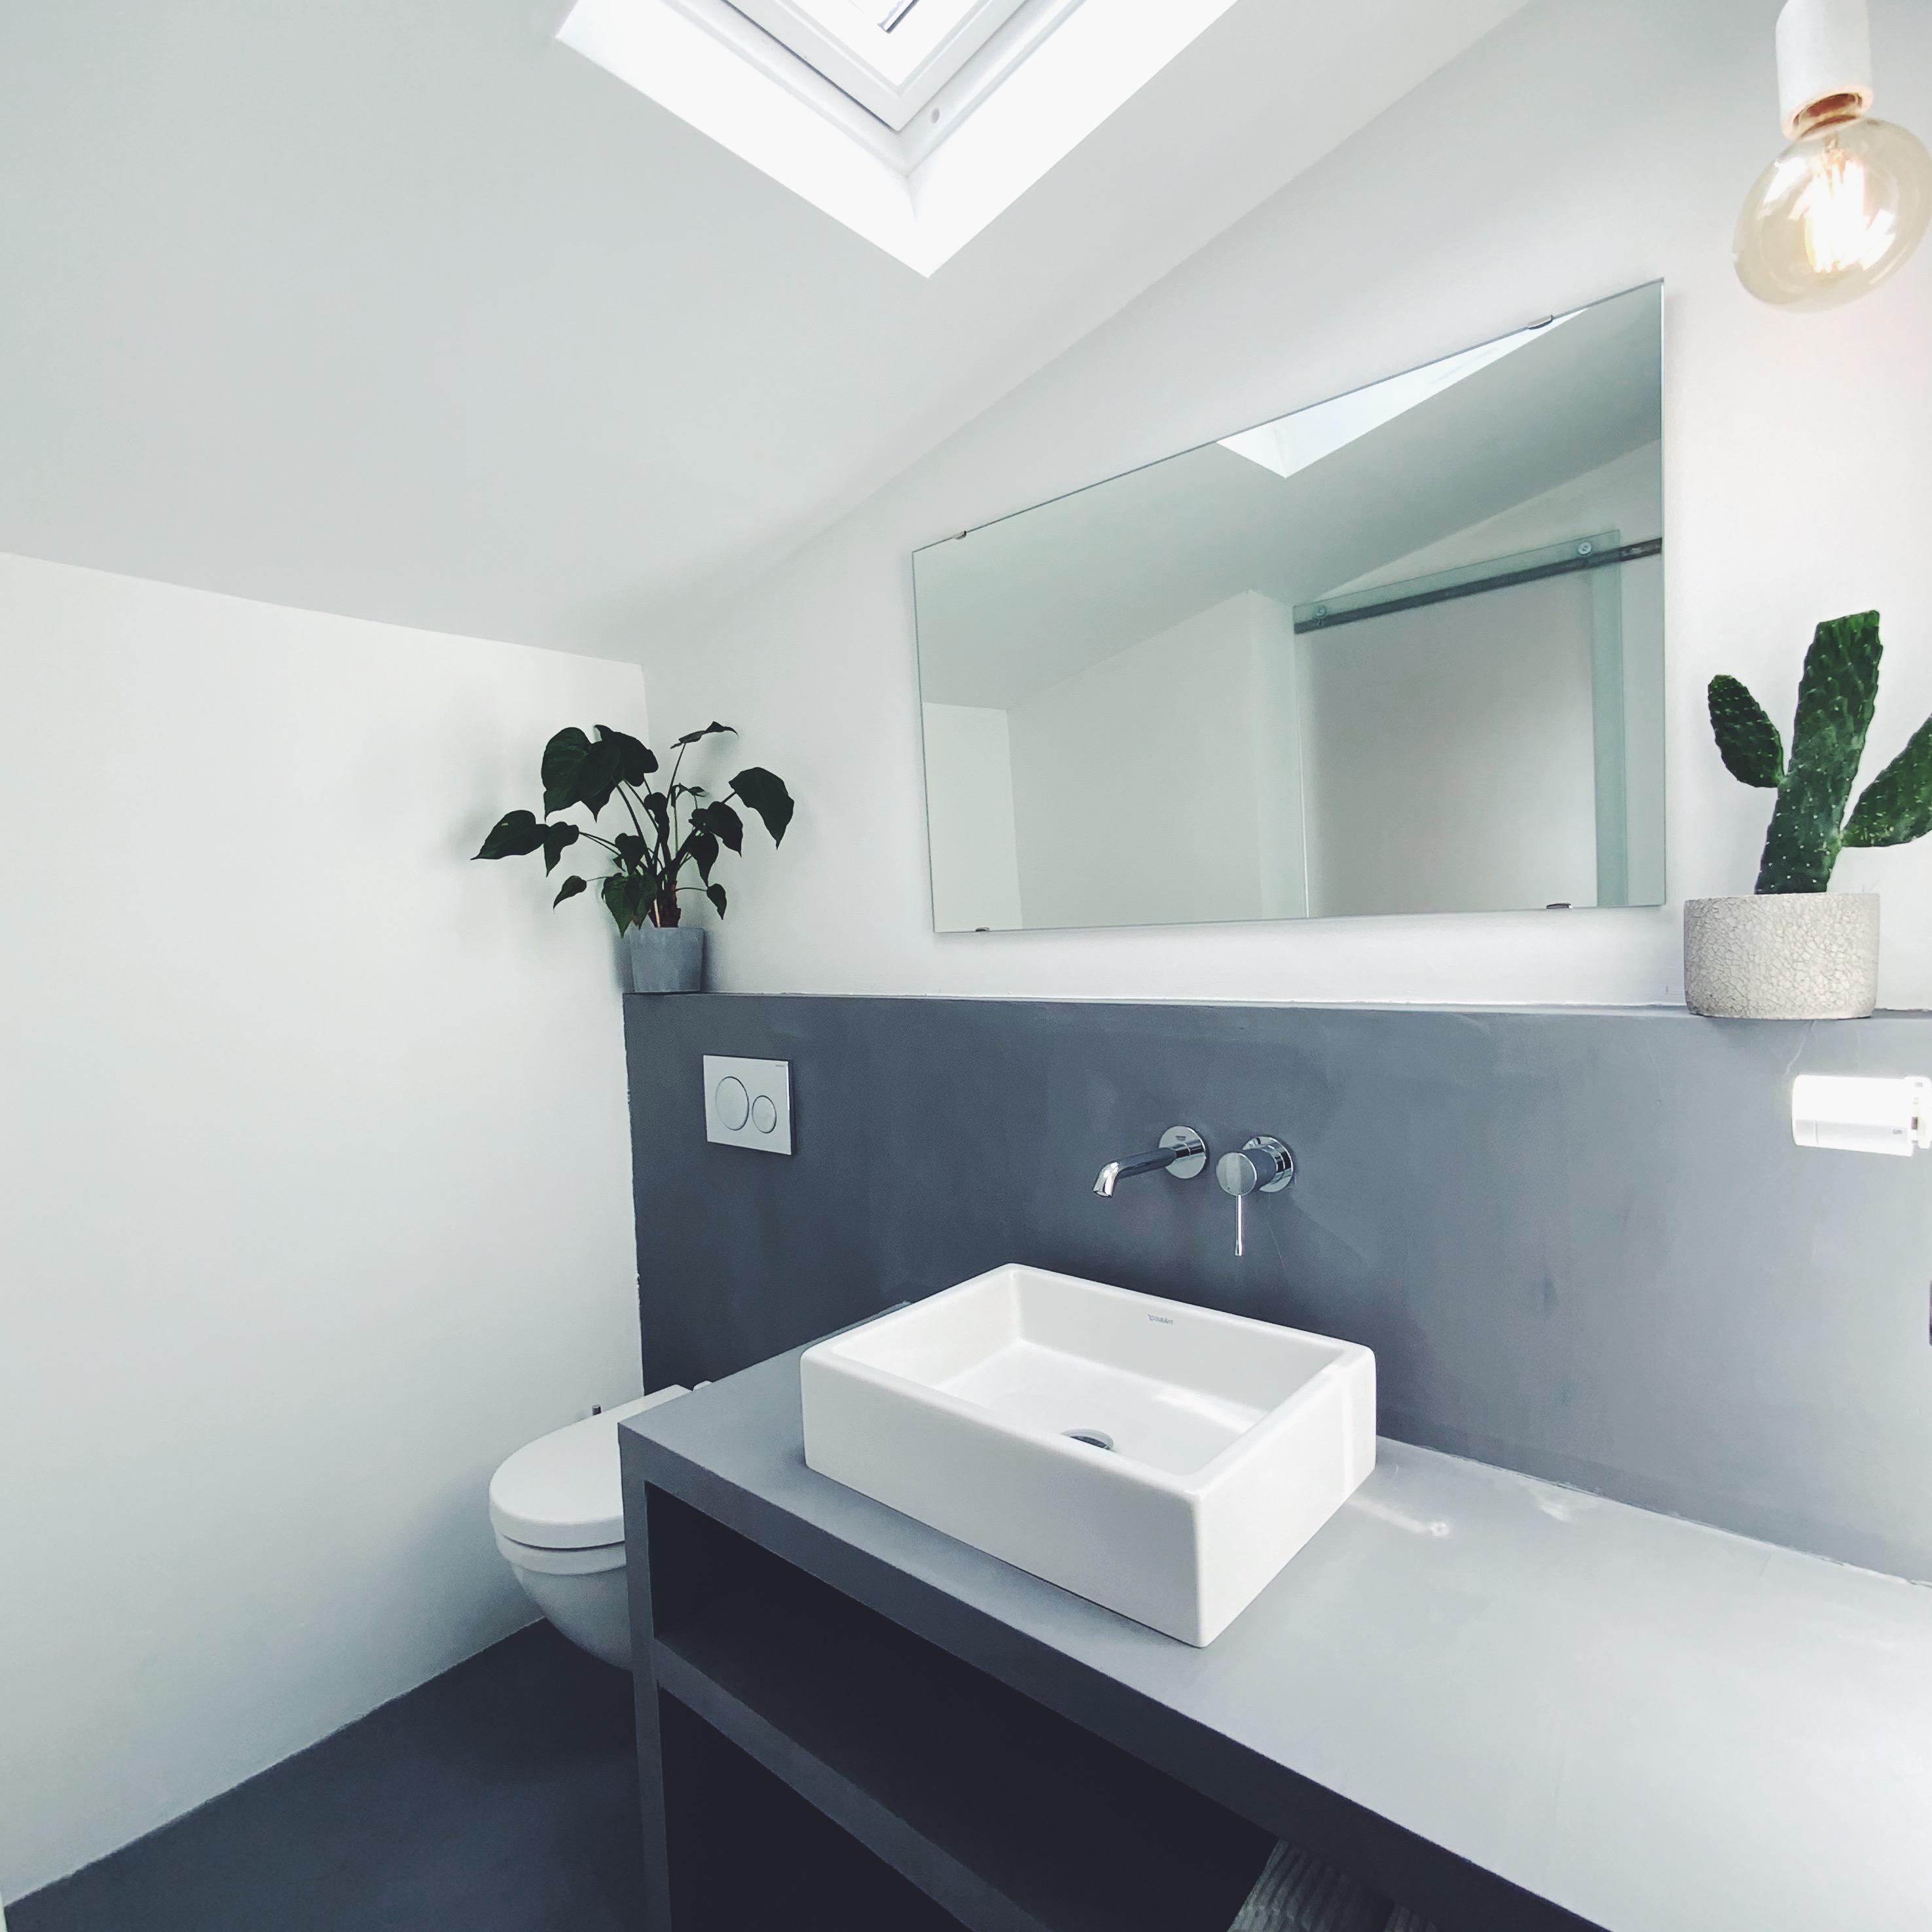 Badezimmer mit Regendusche im @tiny_loft_house_cgn
#livingchallenge #badezimmer #airbnb #tinyhouse #bathroom